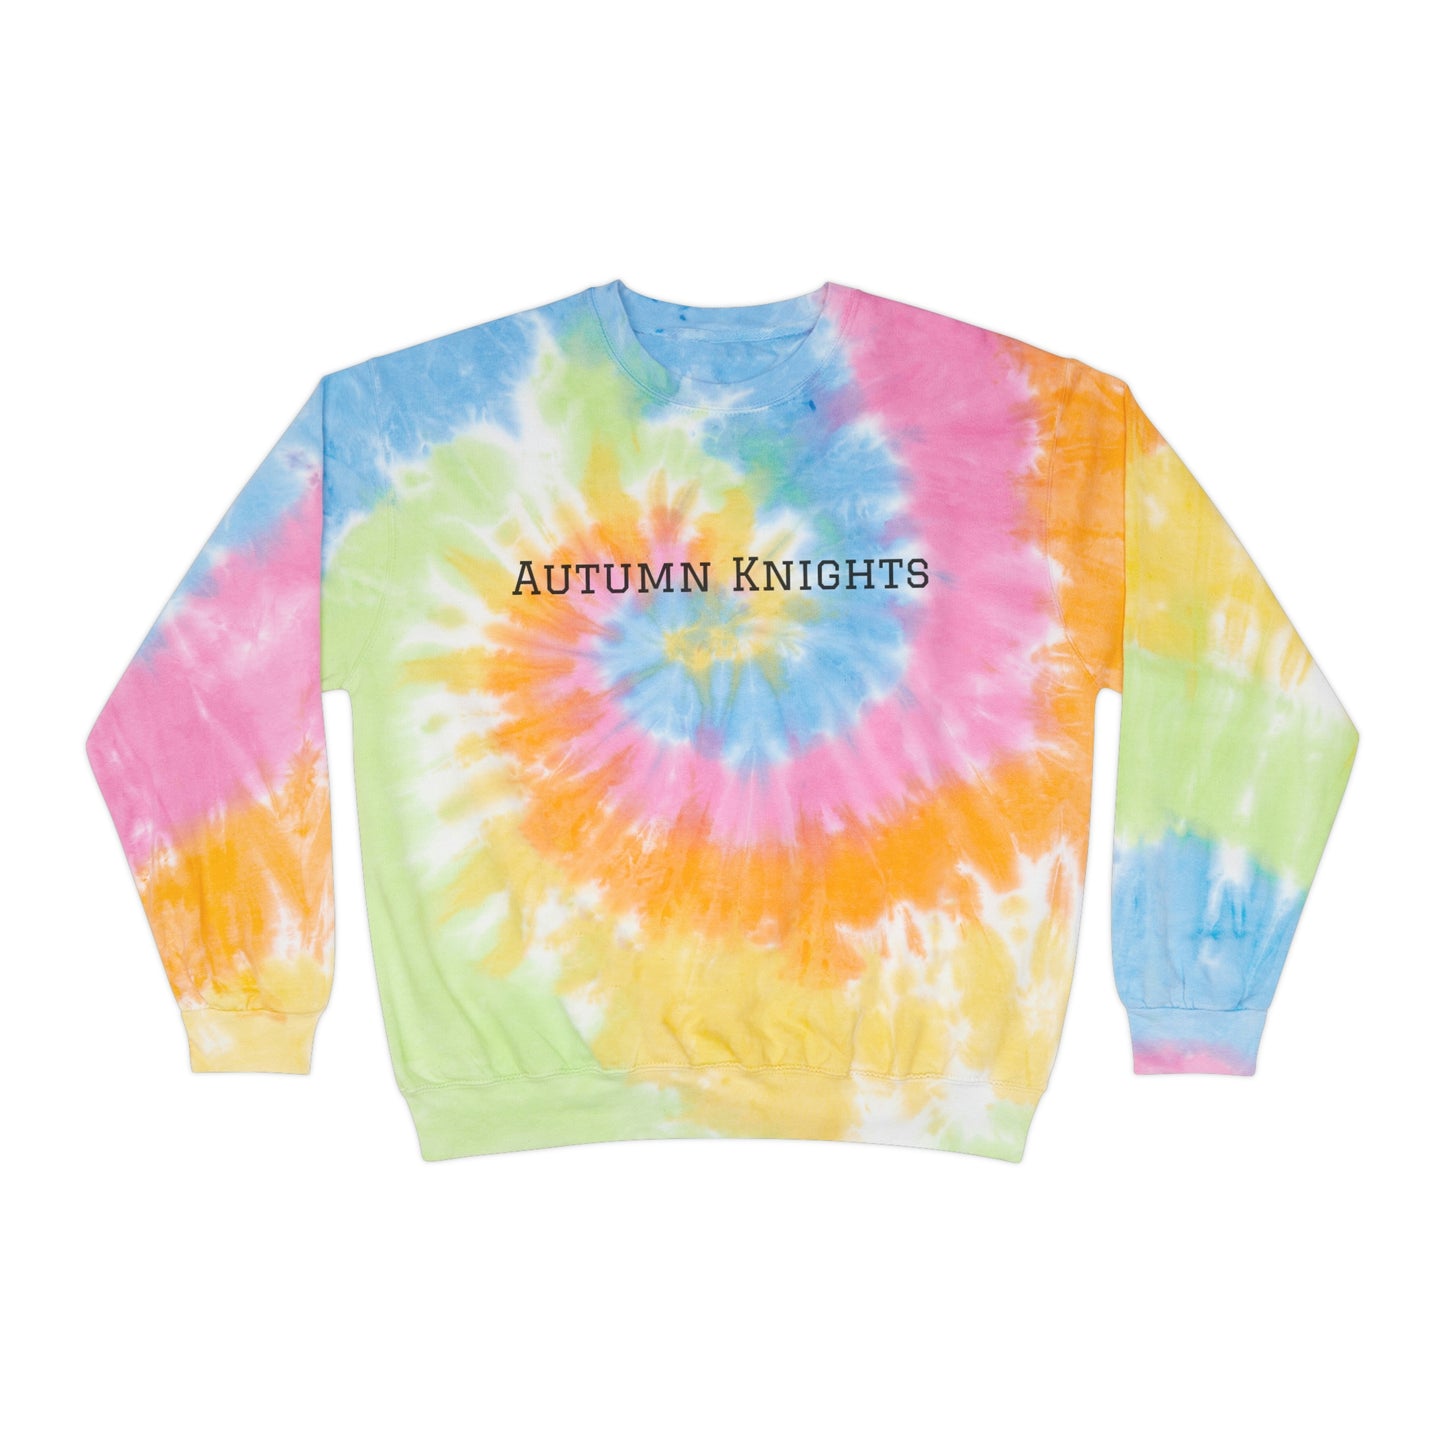 Autumn Knights - Tie-Dye Sweatshirt